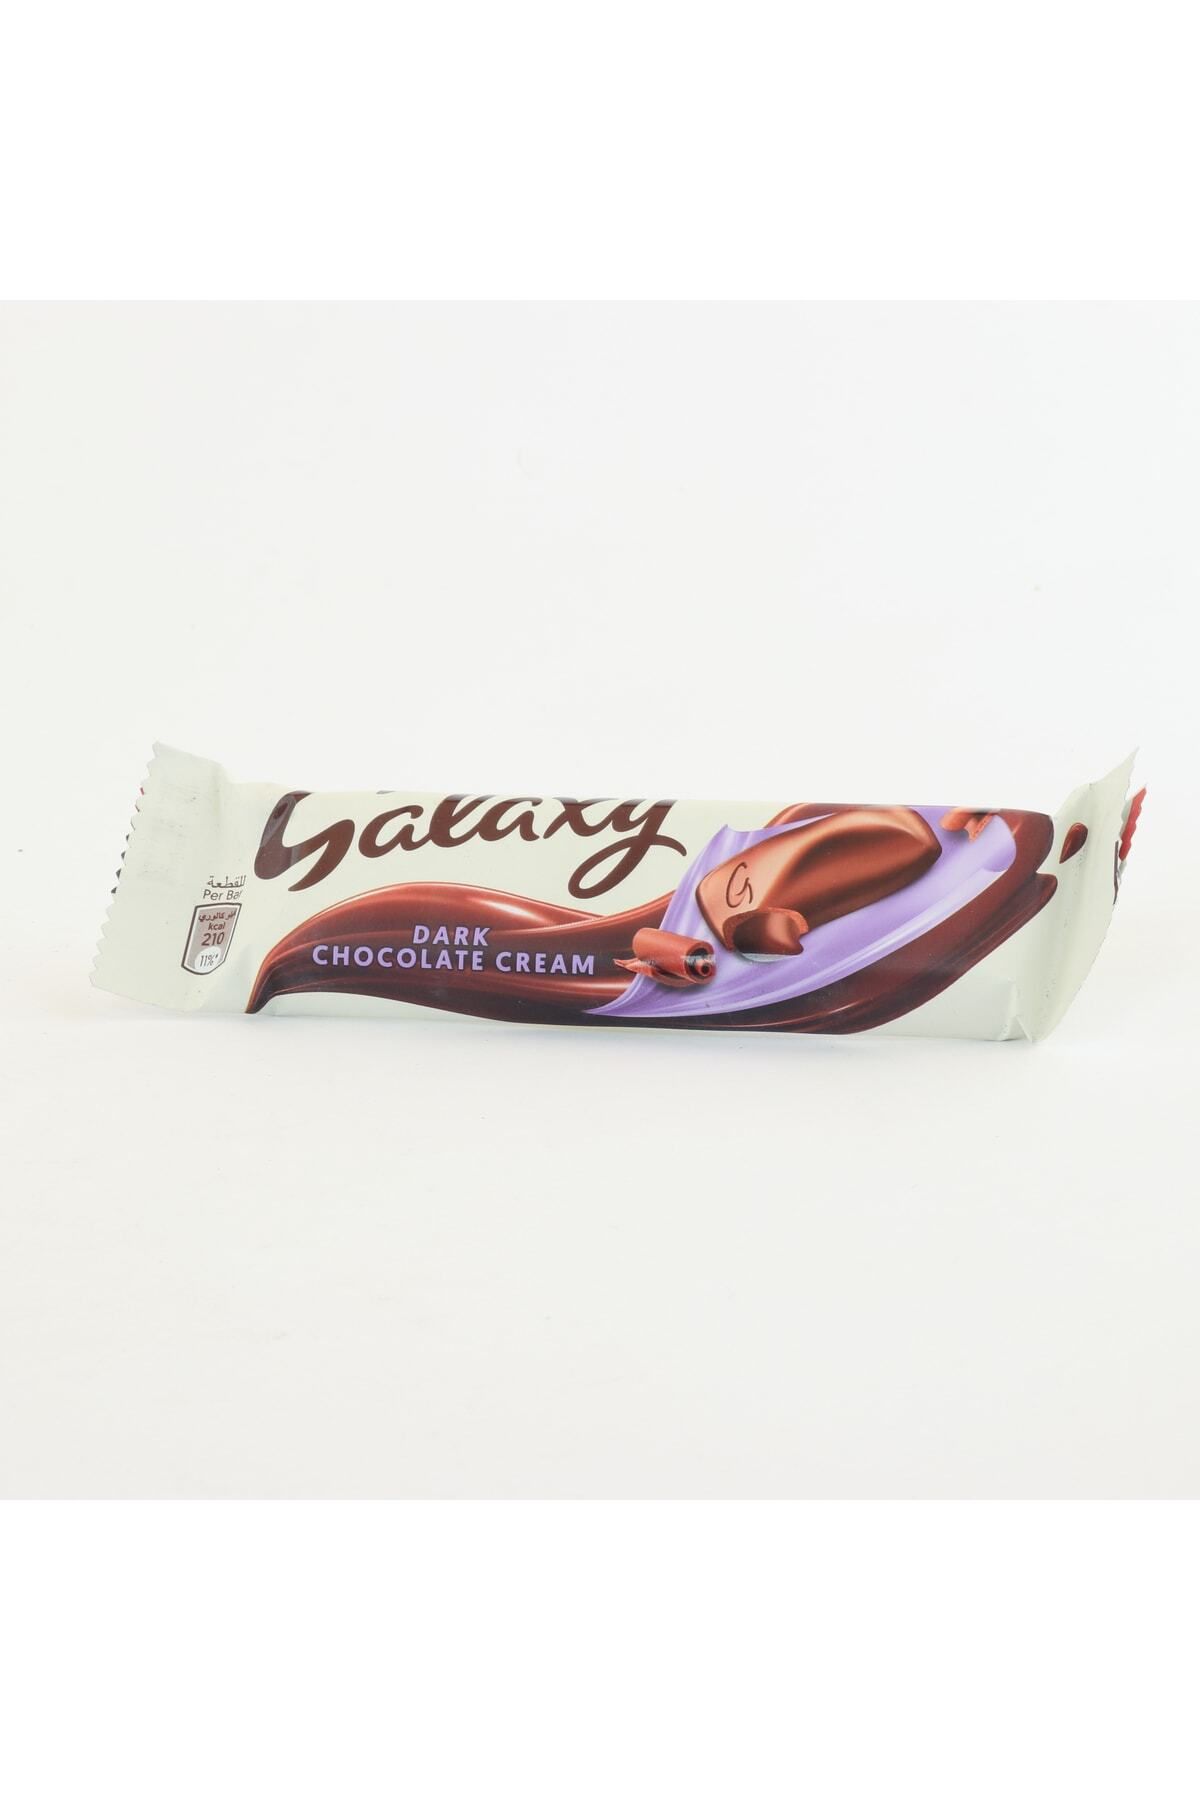 Galaxy Dark Chocolata Cream